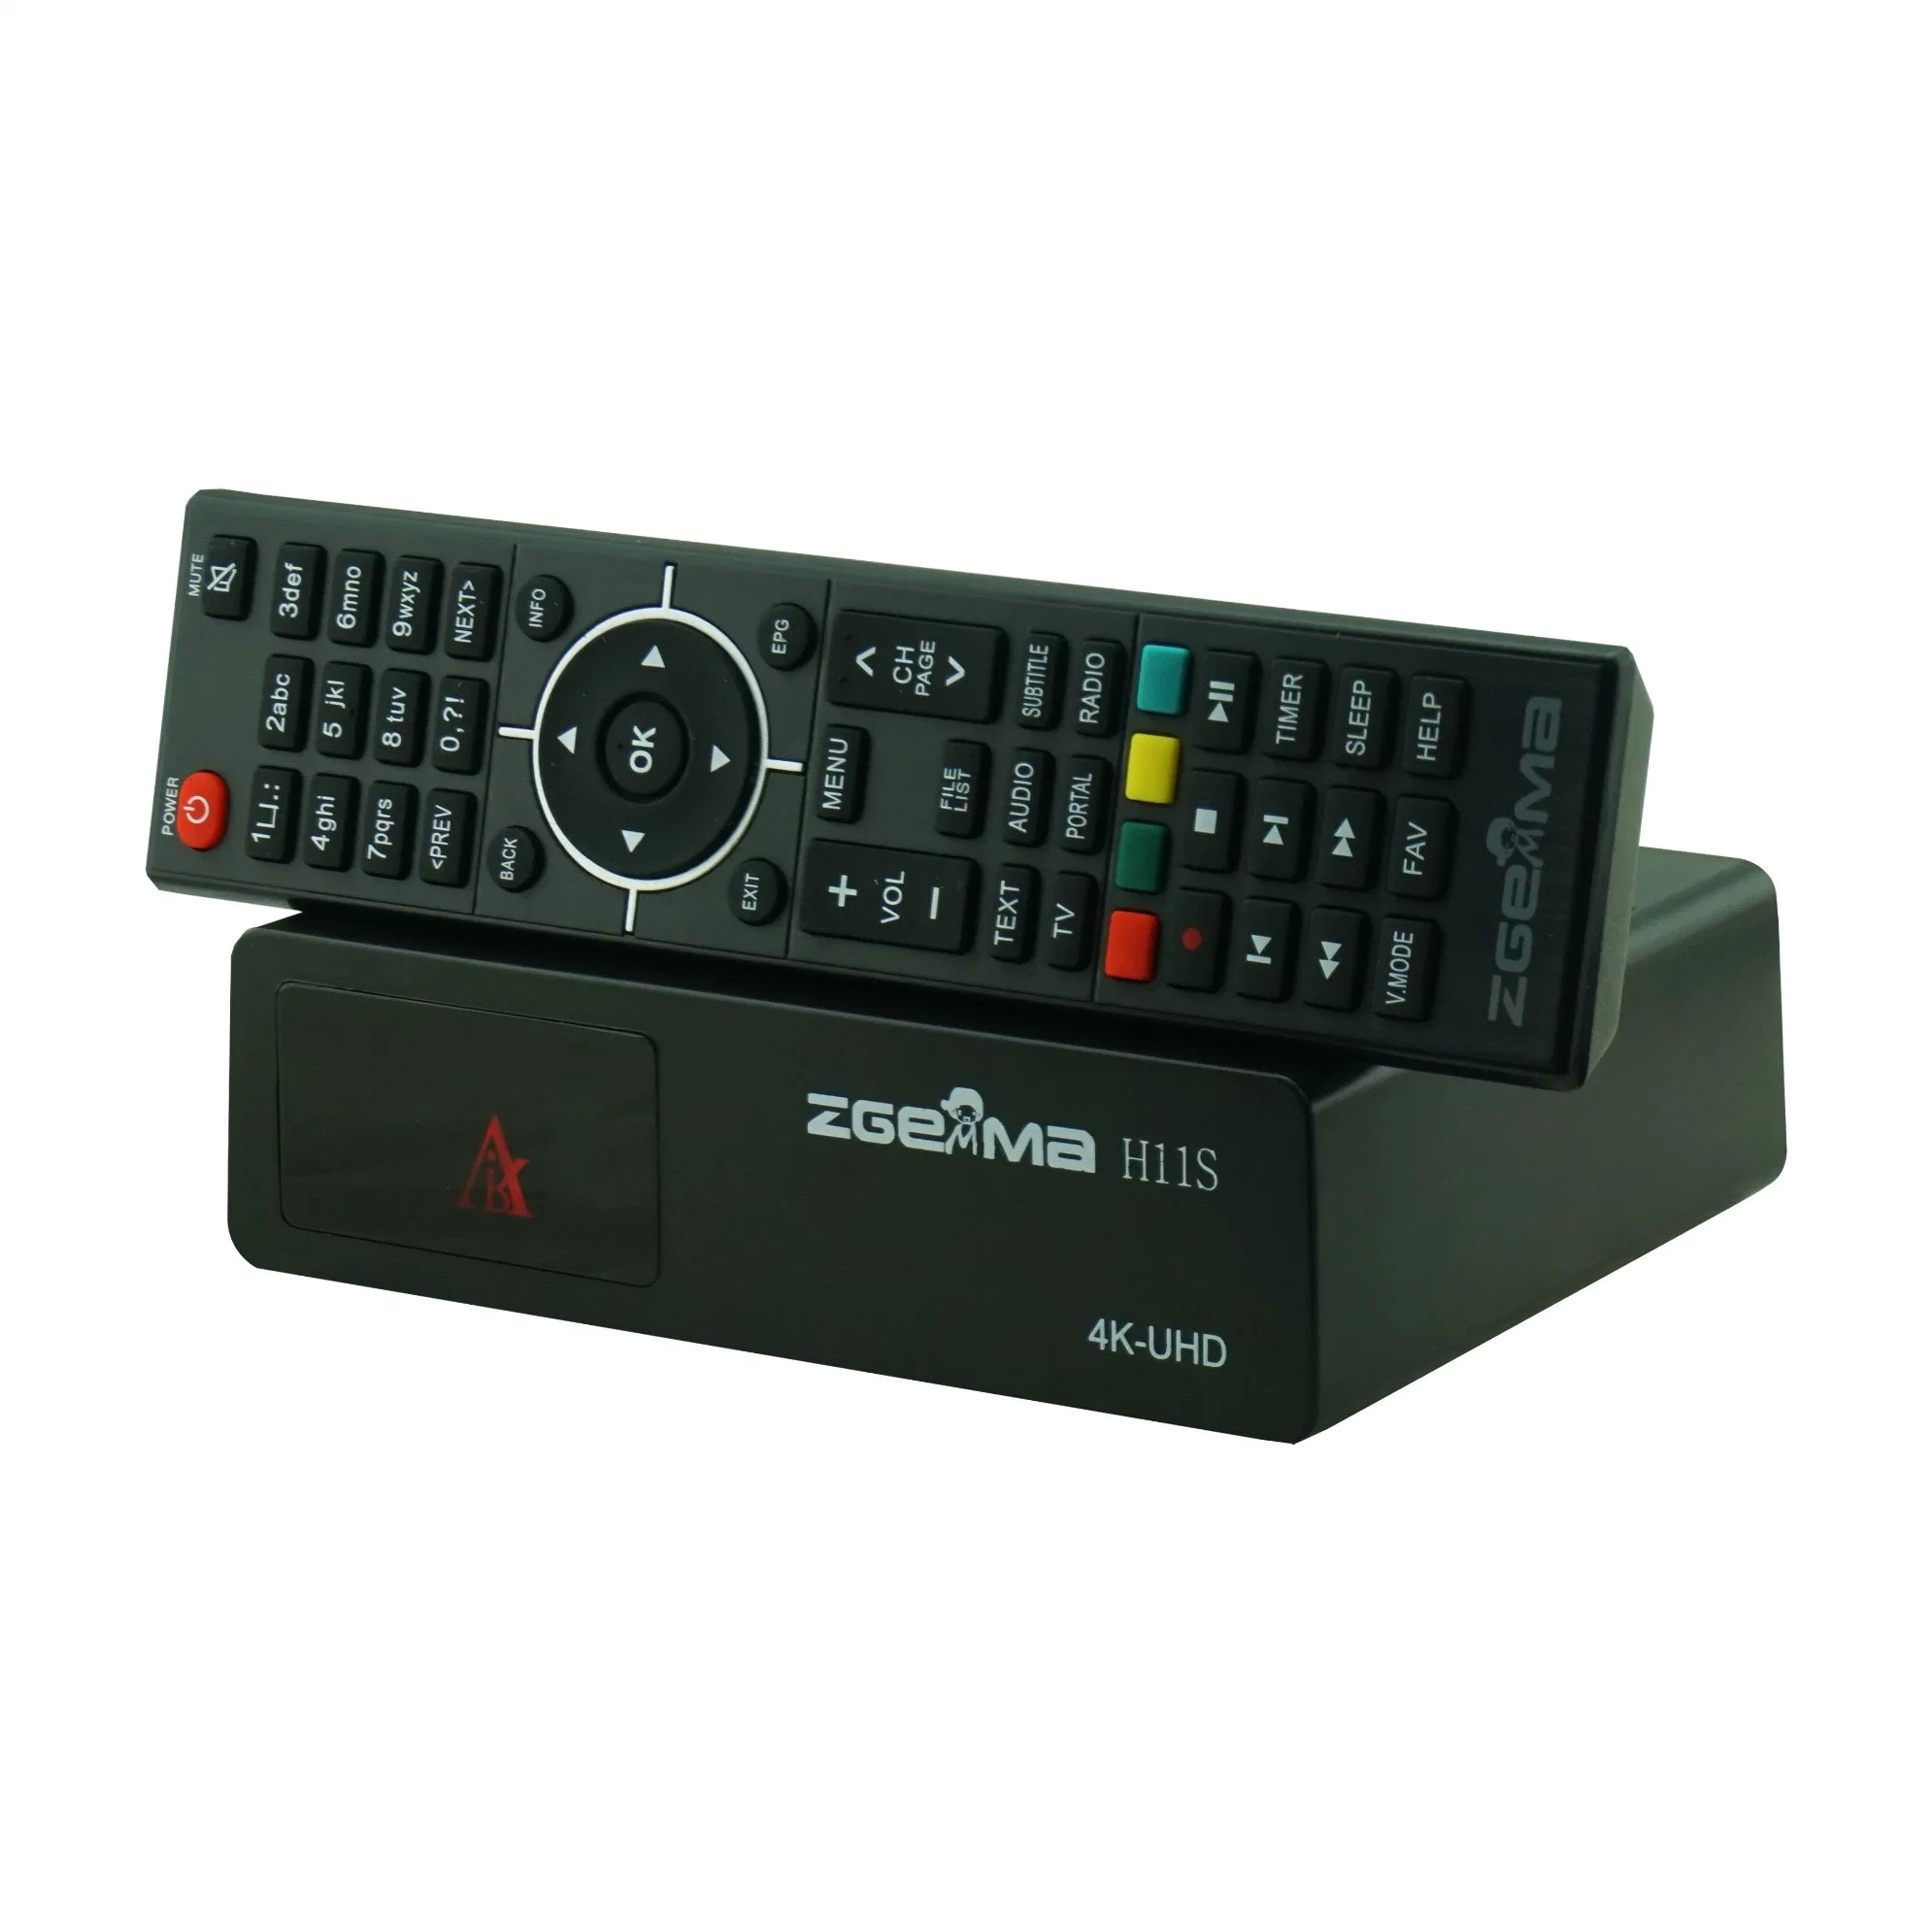 Zgemma H11s TV Box DVB-S2X Tuner Built-in Support 4K- 2160p Enigma2 Linux OS